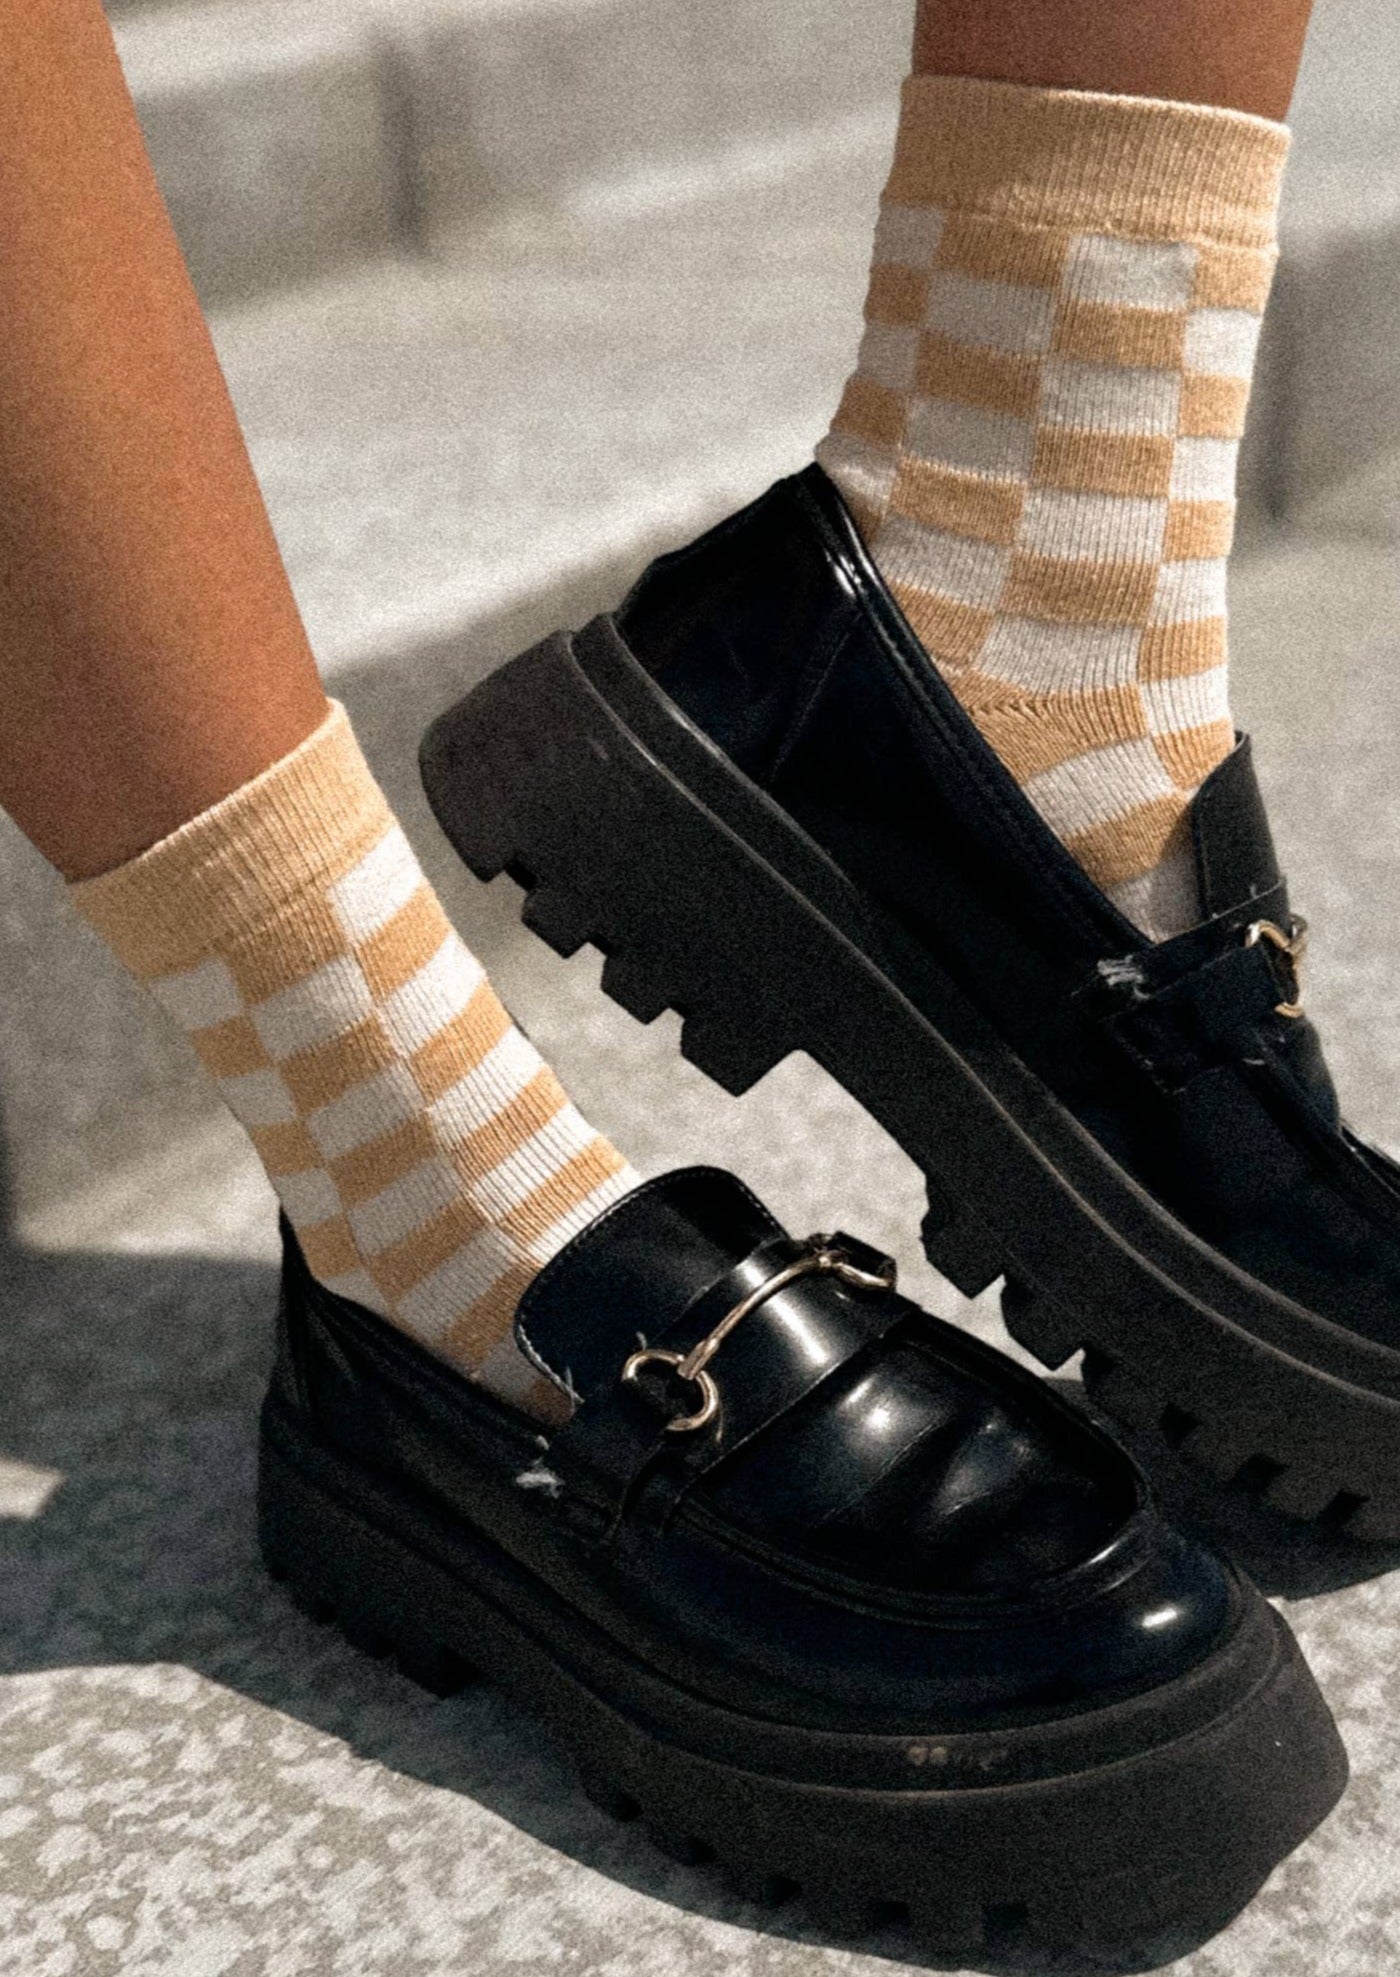 Tan Checker Socks